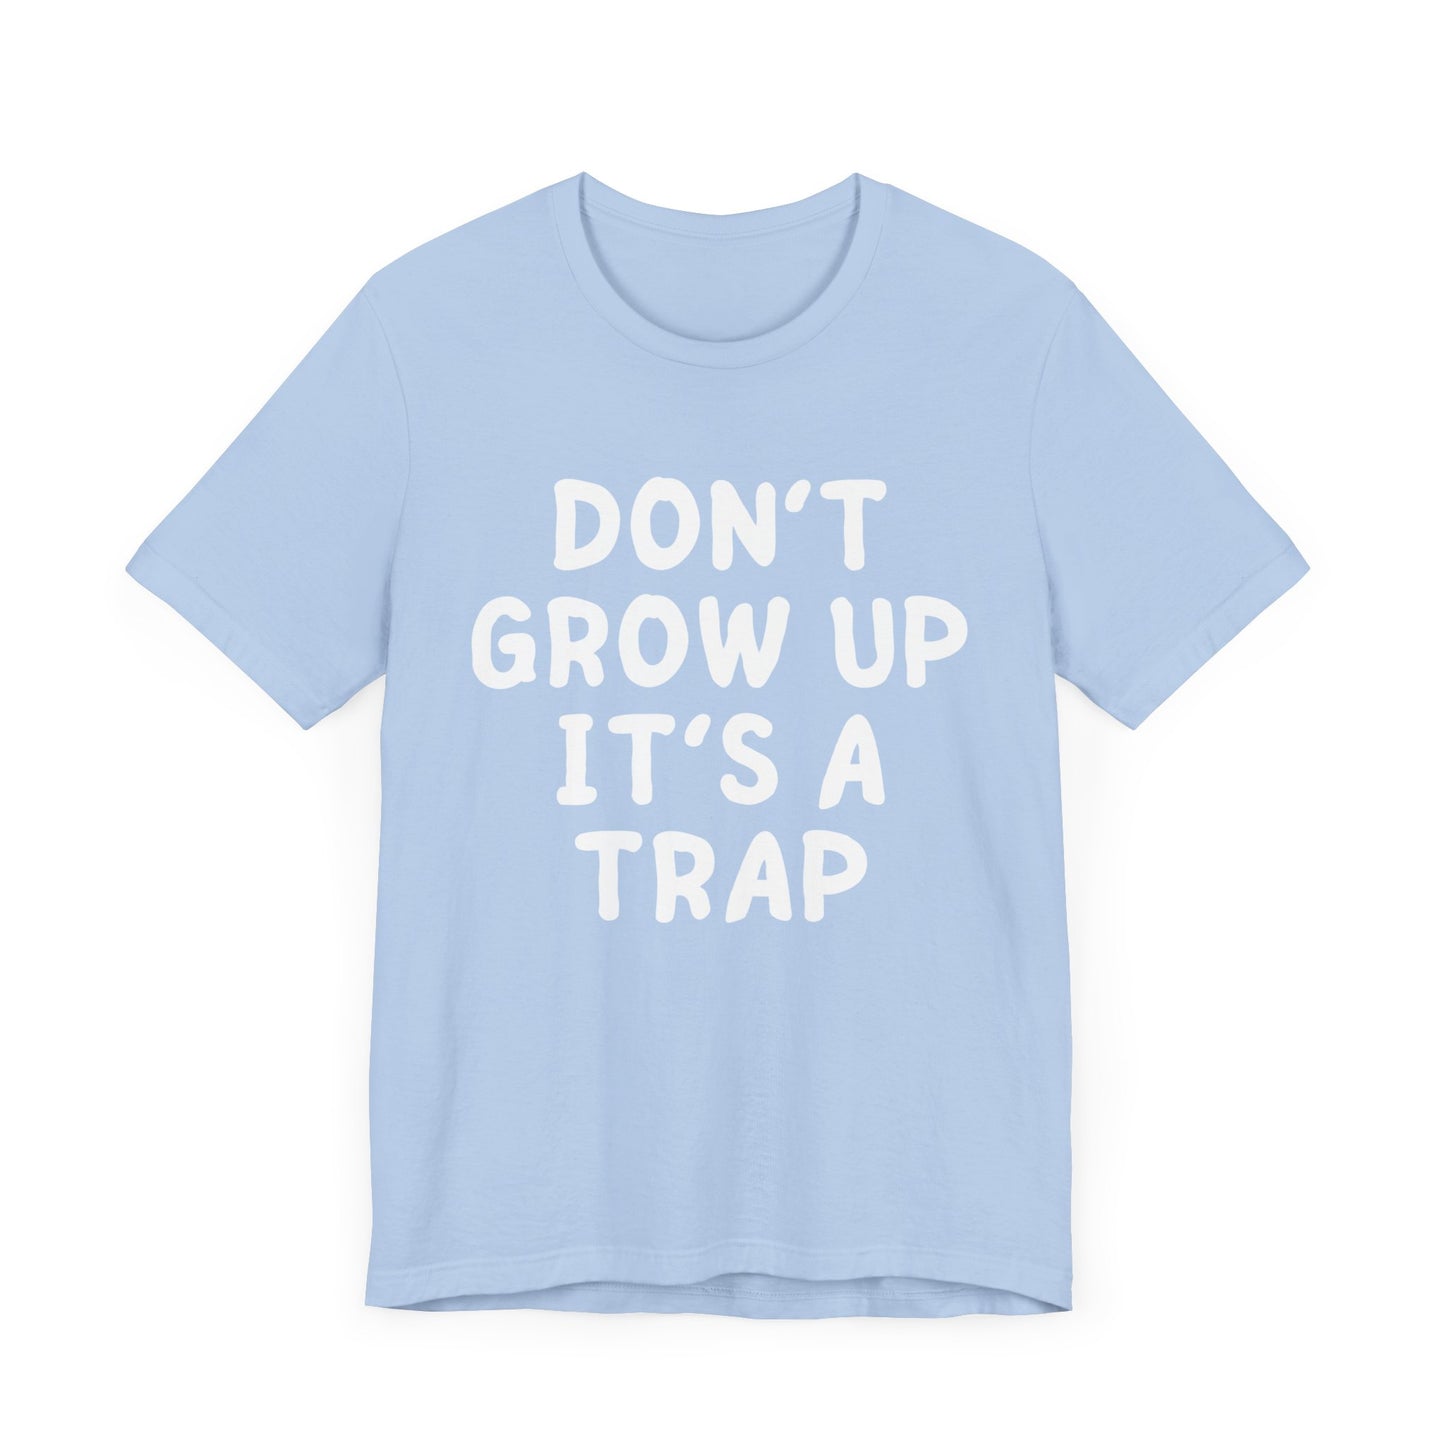 Don't Growp Up It's A Trap - T-Shirt